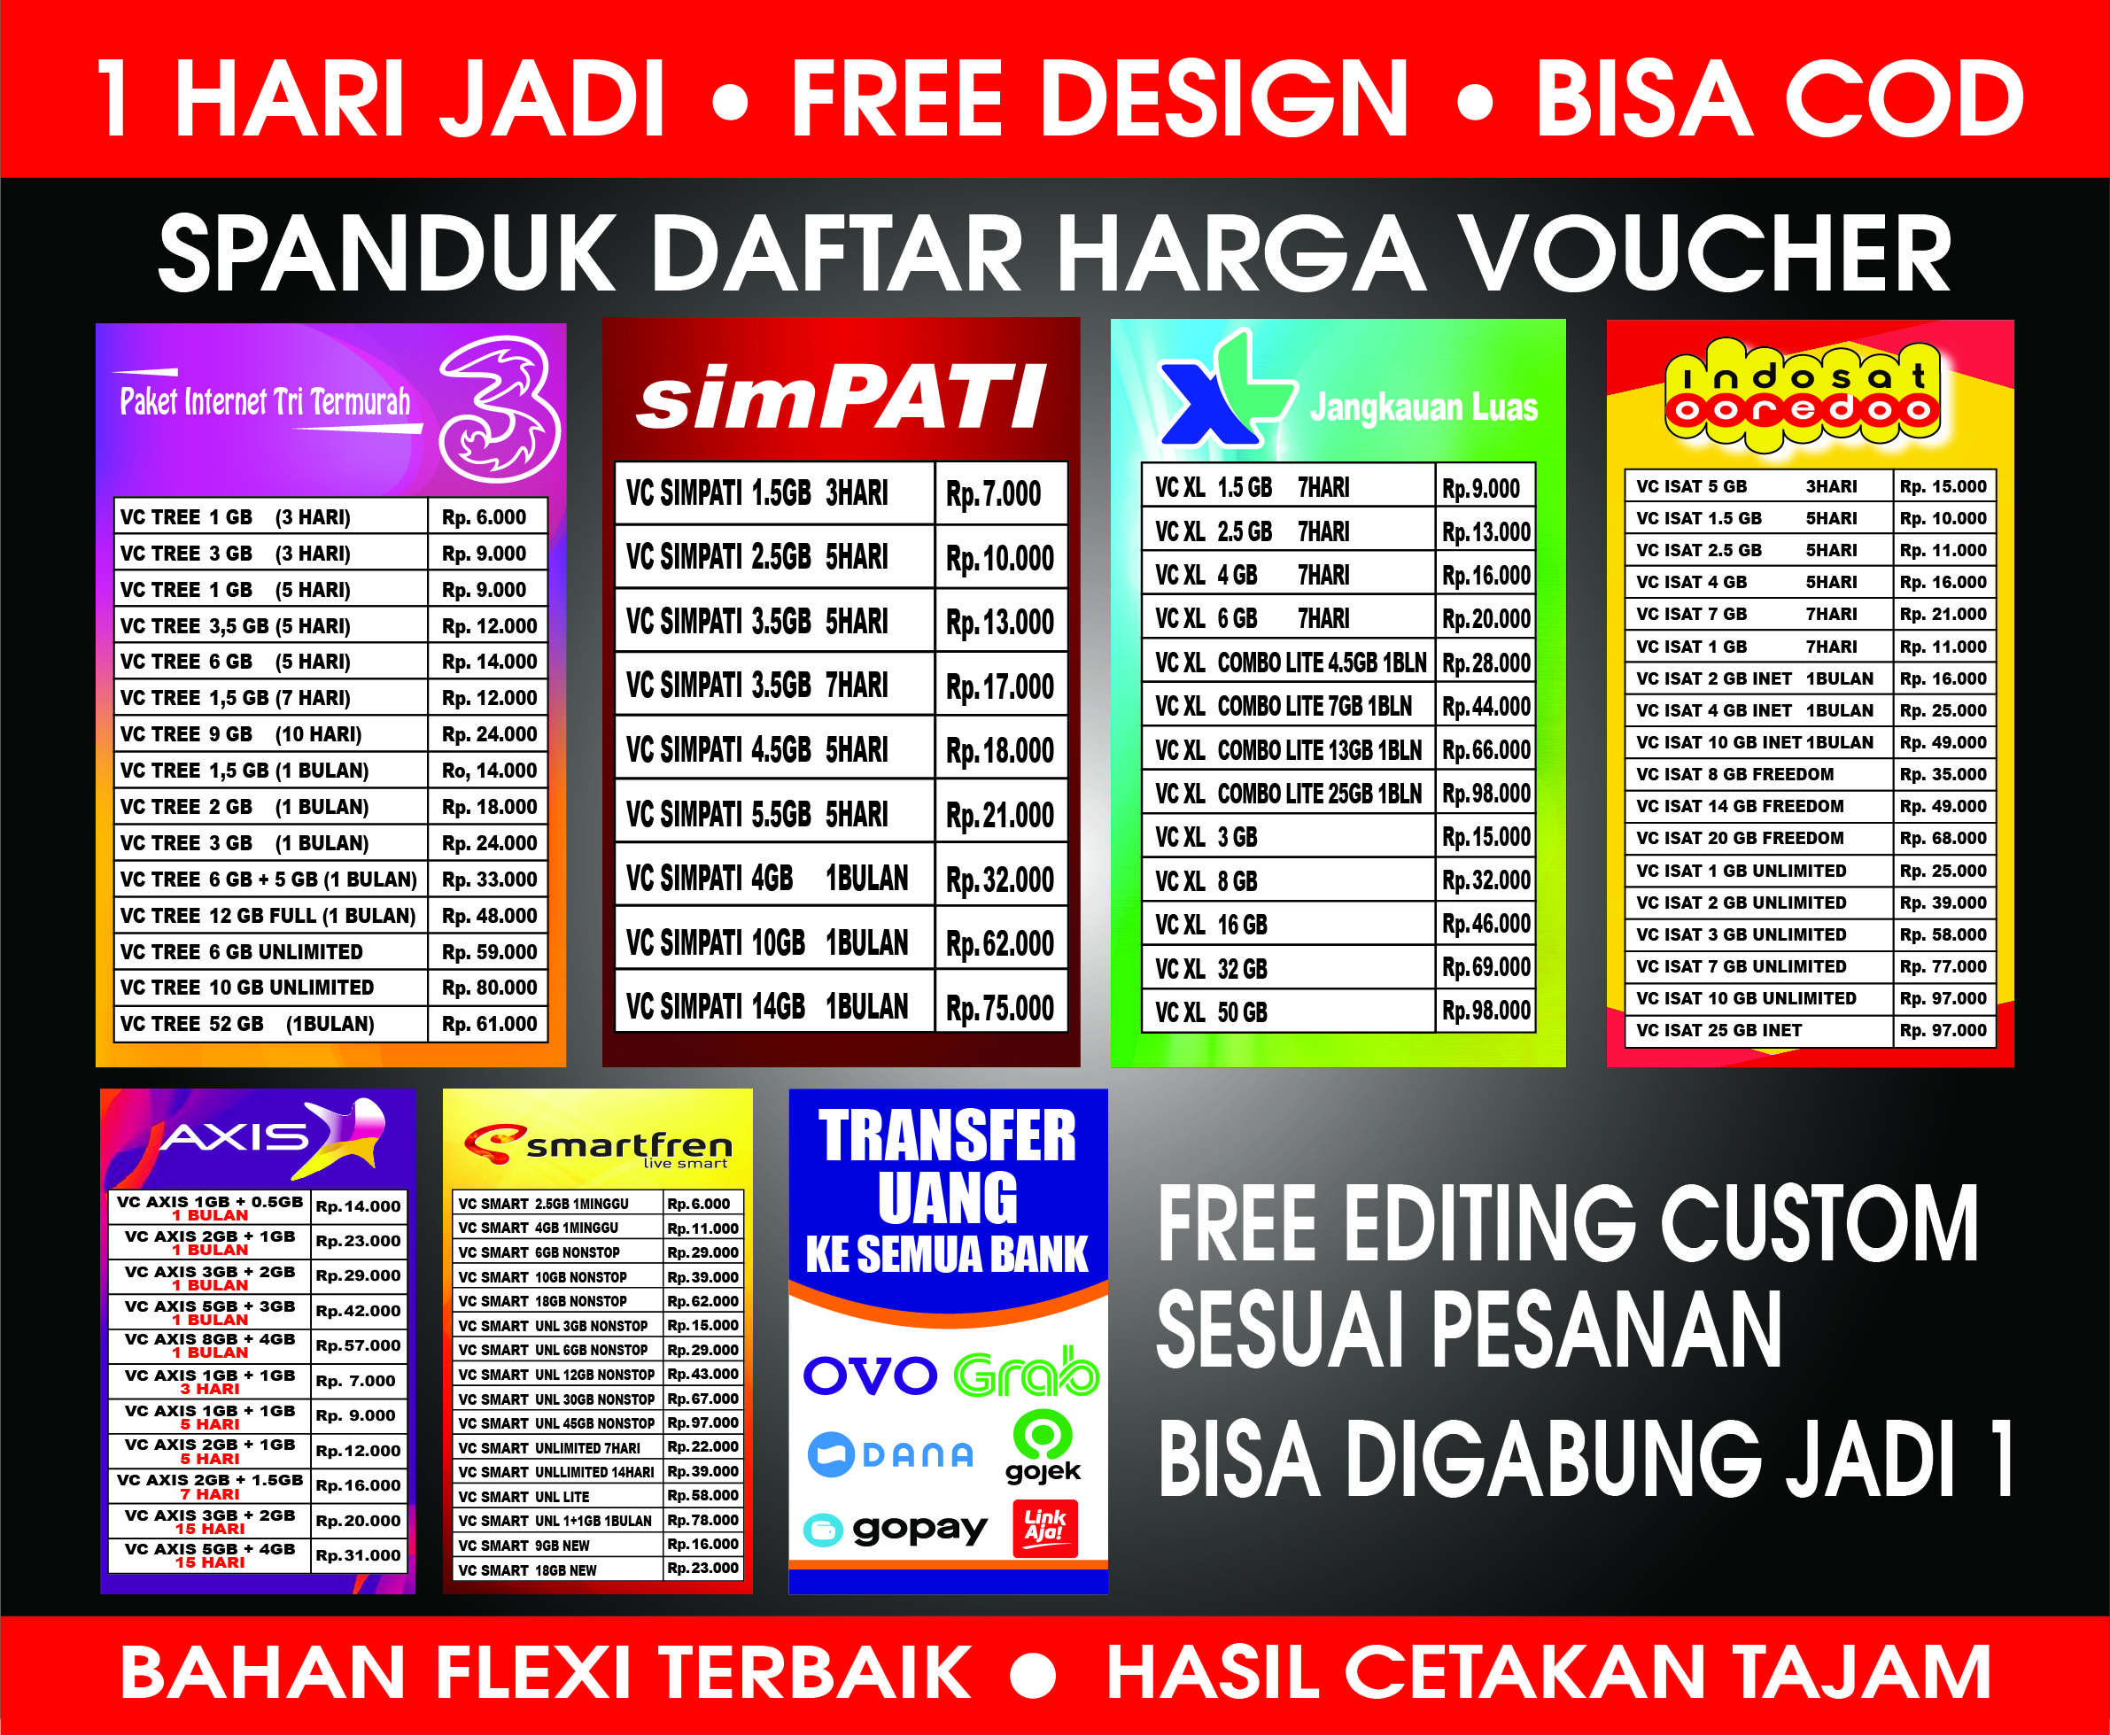 Spanduk Daftar Harga Voucher All Operator Free Design Lazada Indonesia 1551